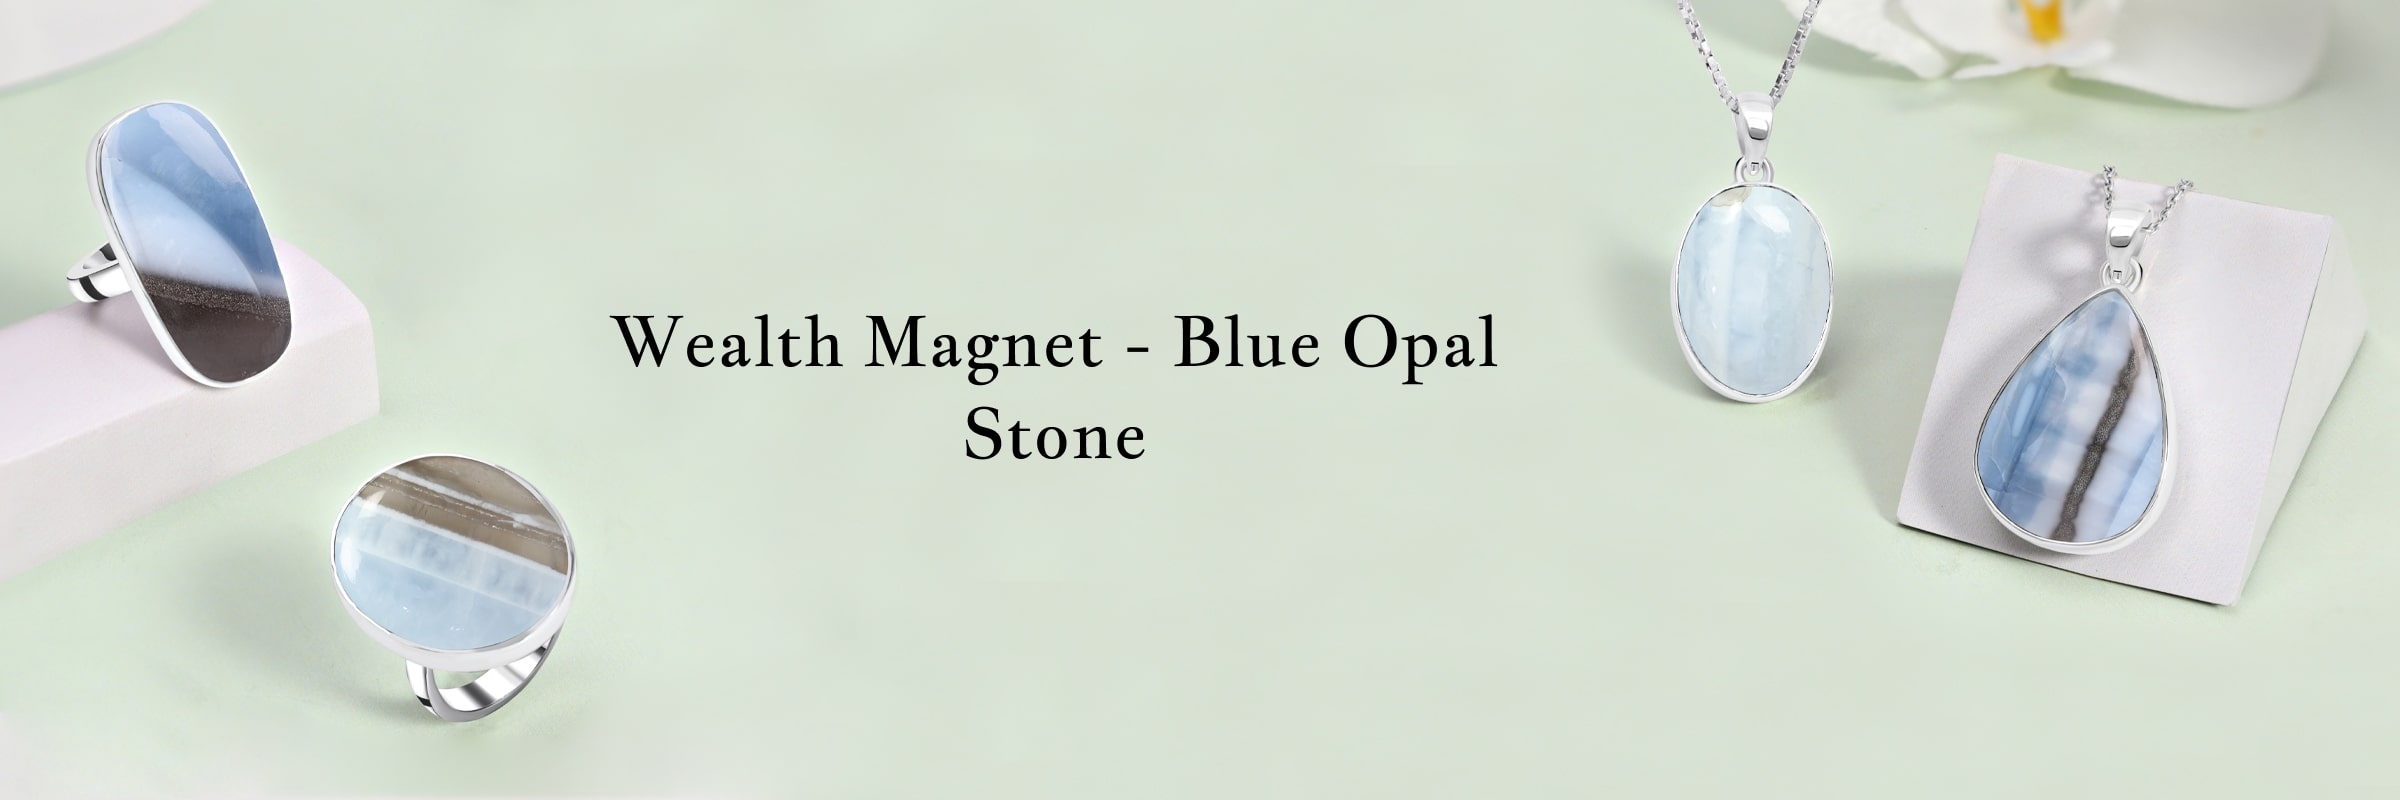 Financial Benefits of Blue Opal Stone